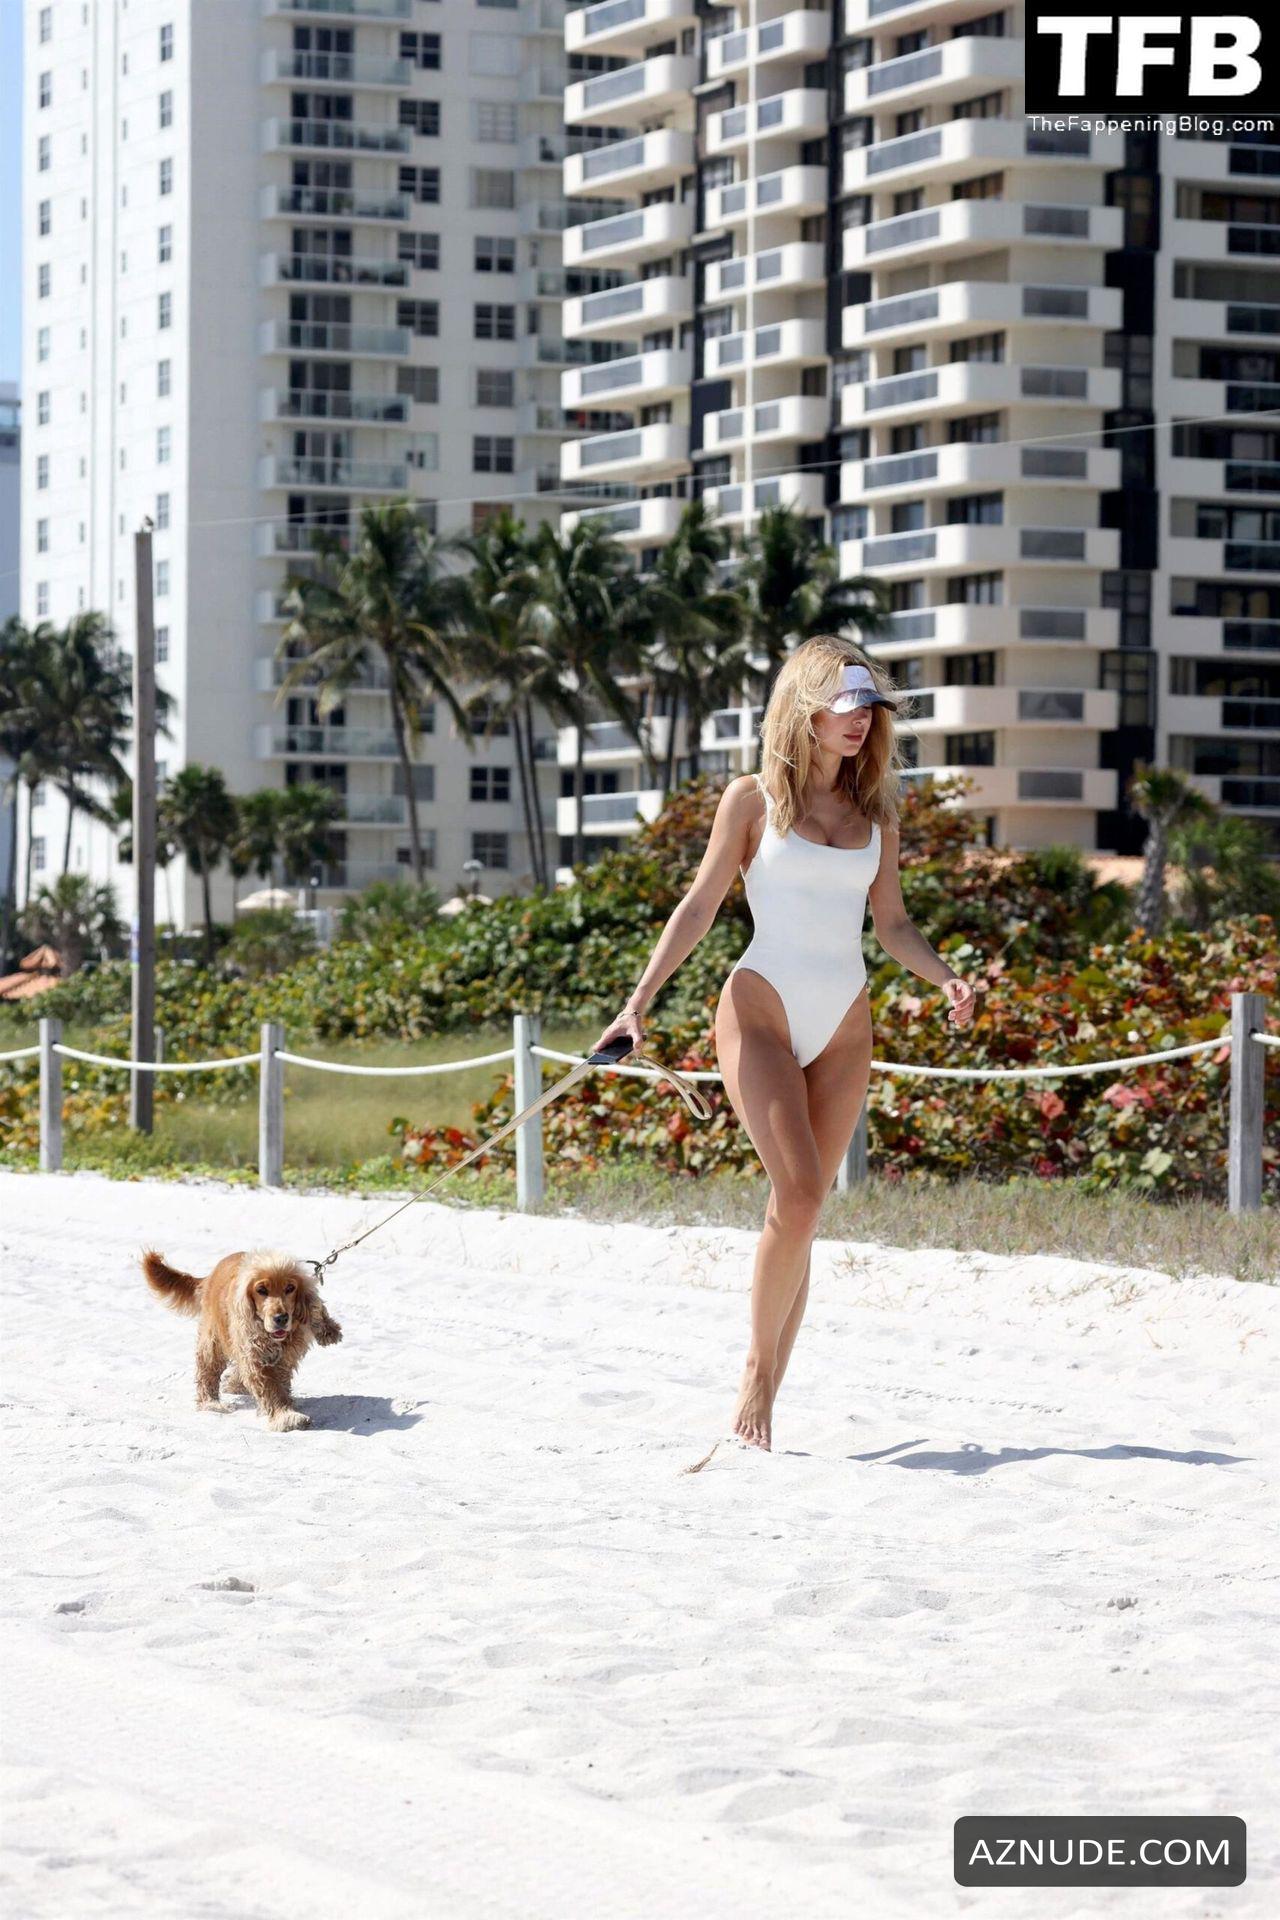 Kimberley Garner Sexy Seen Showing Off Her Hot Bikini Body In A White One Piece In Miami Beach